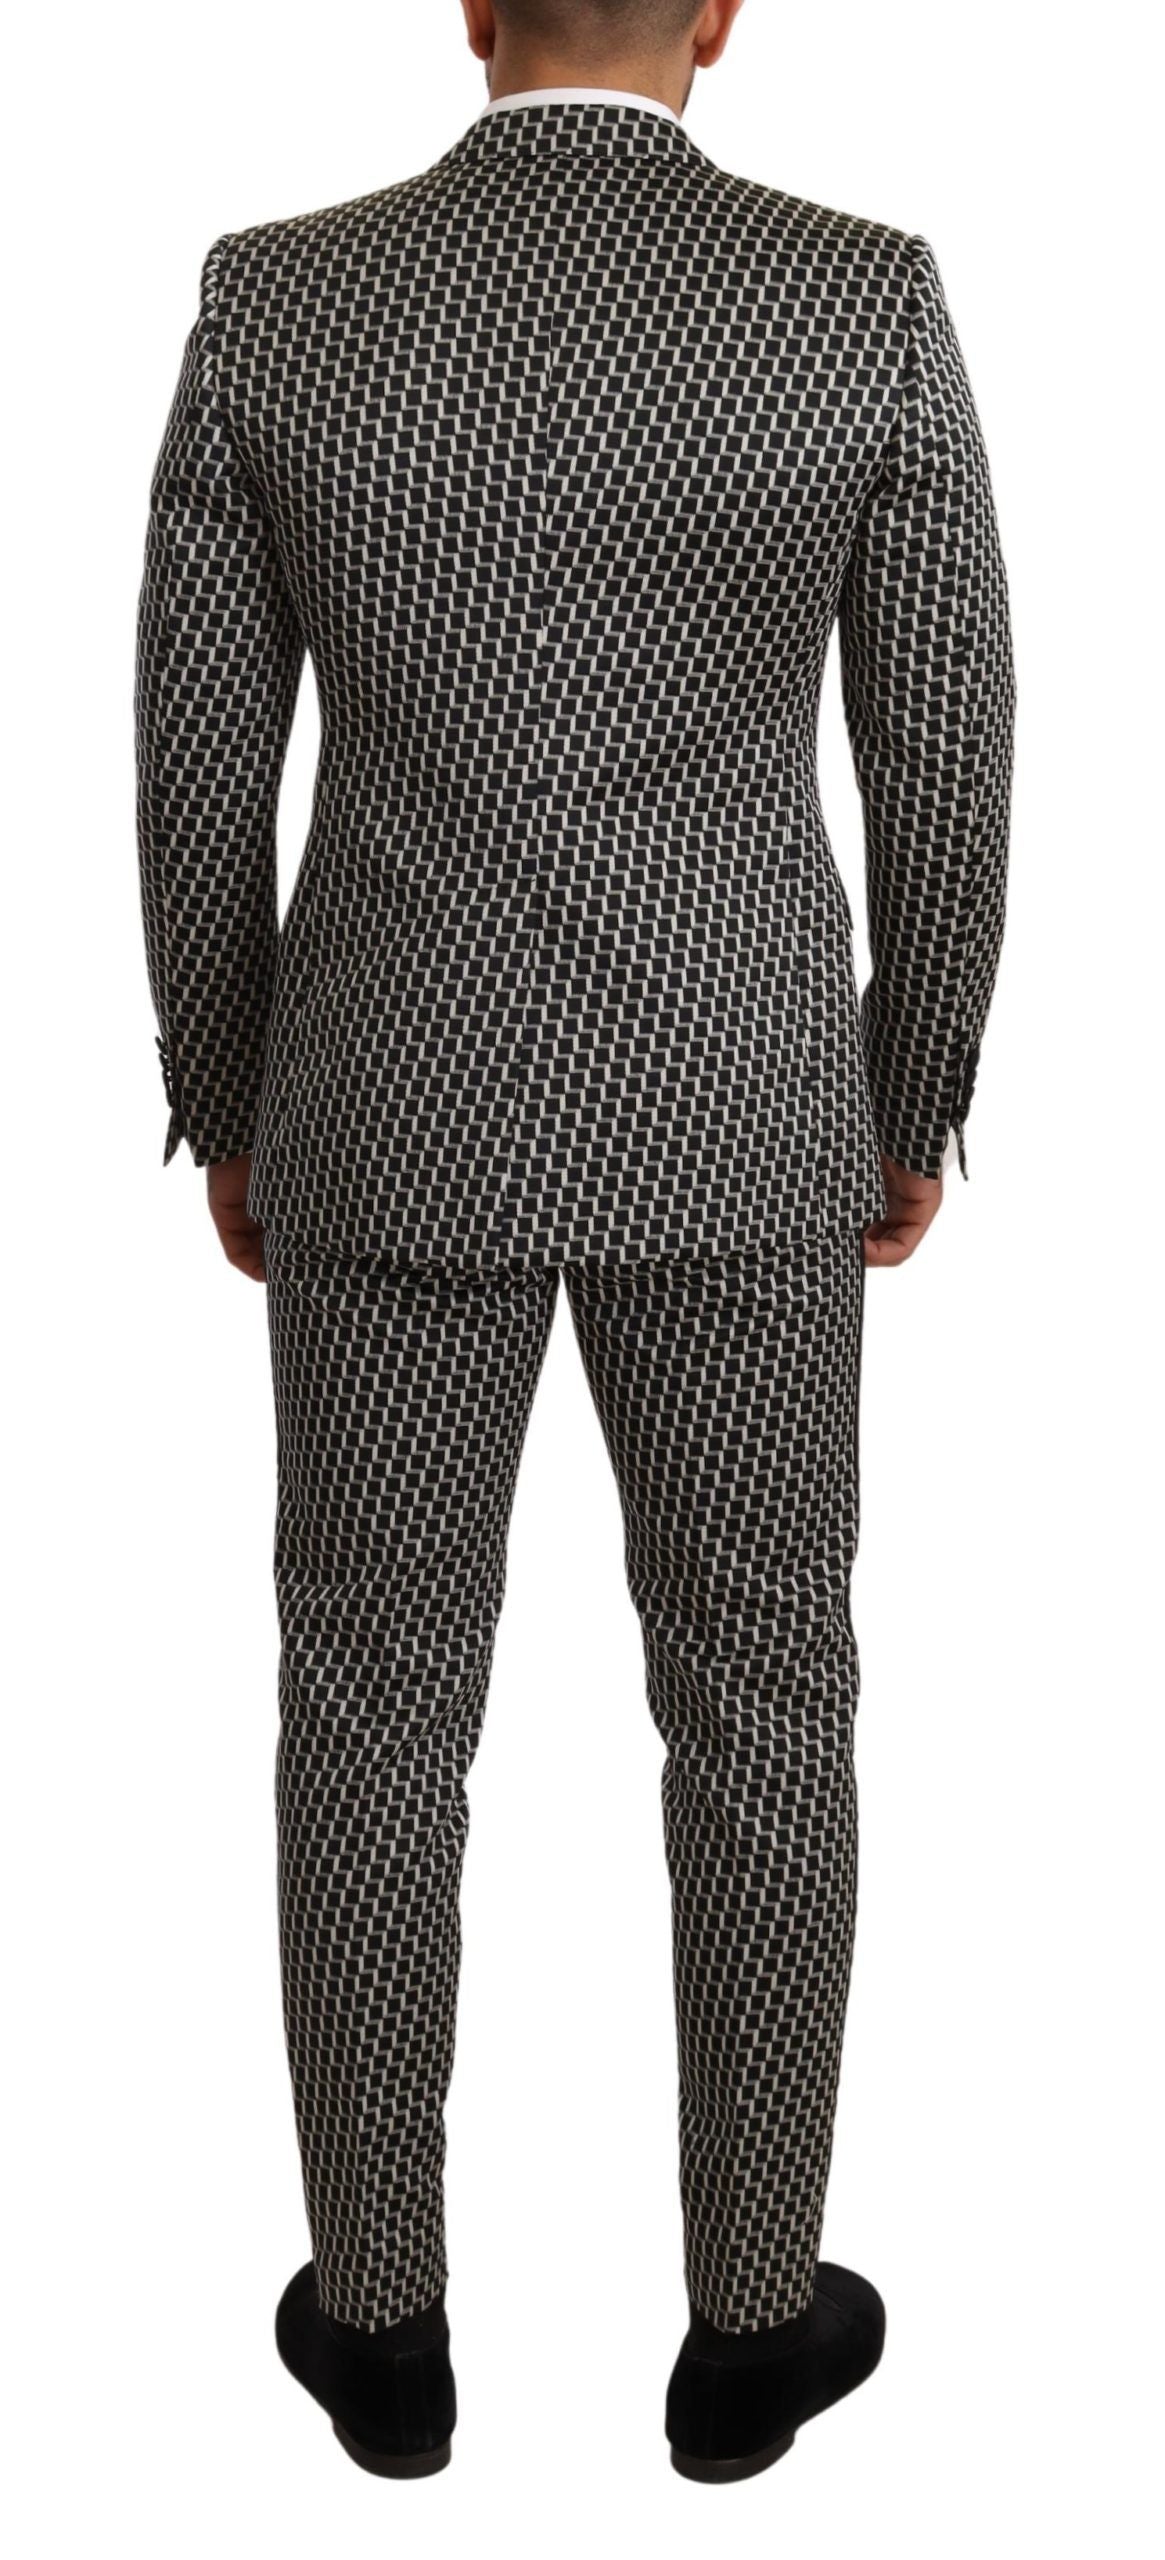 Dolce & Gabbana Black White Check 3 Piece Set MARTINI Suit